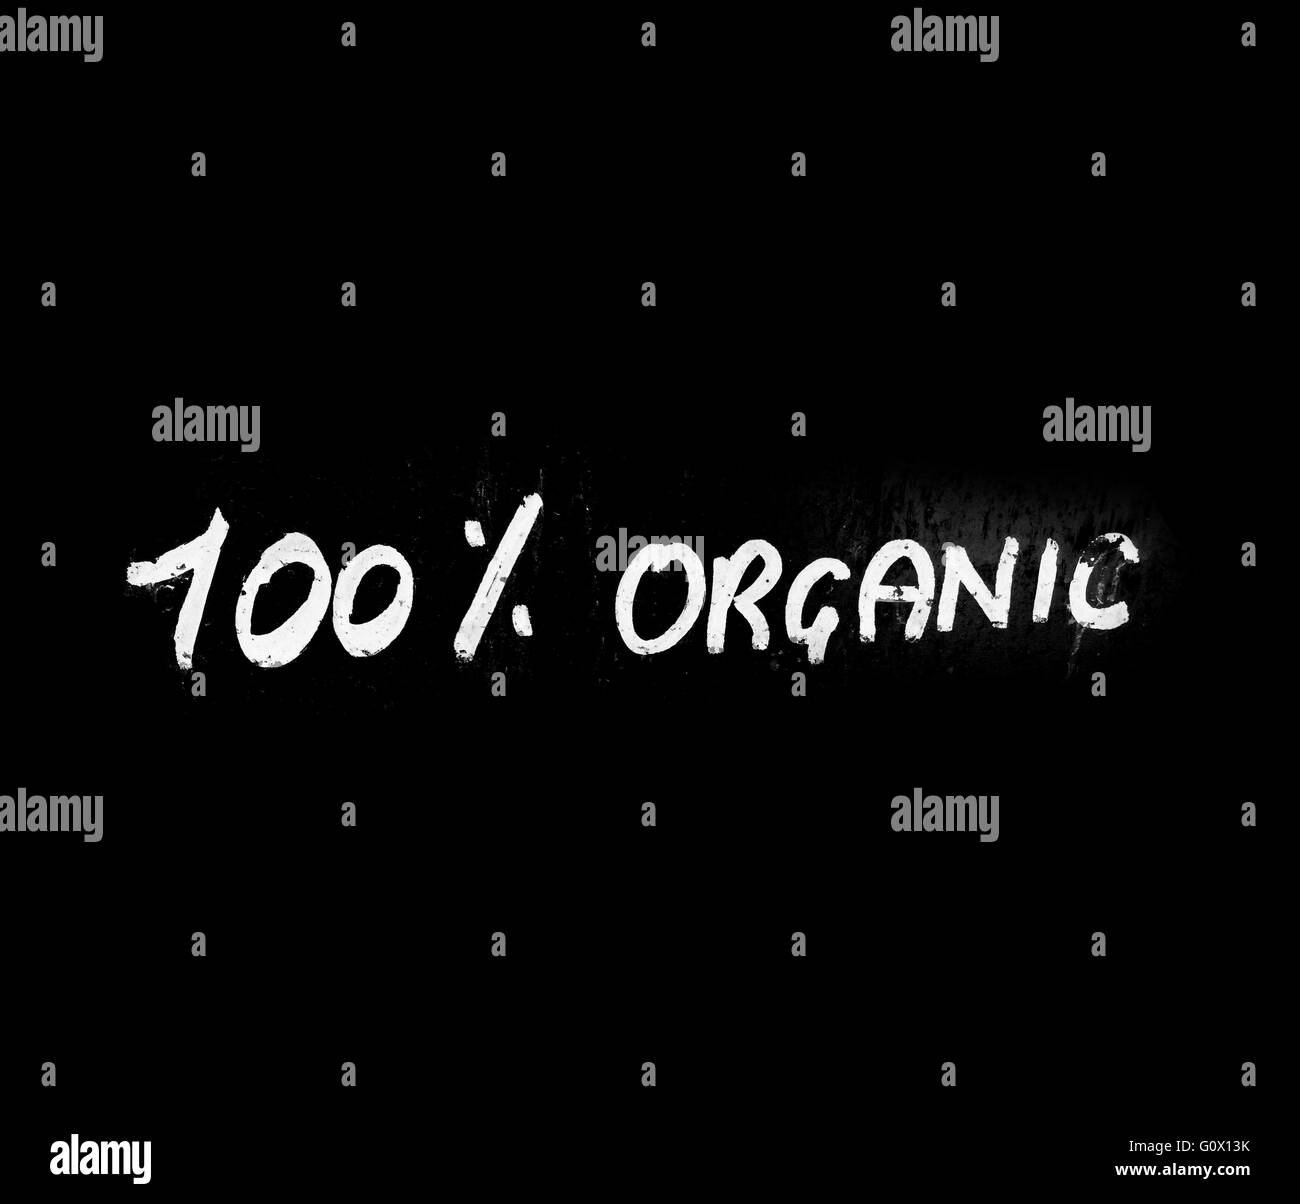 Organic written on a blackboard Stock Photo